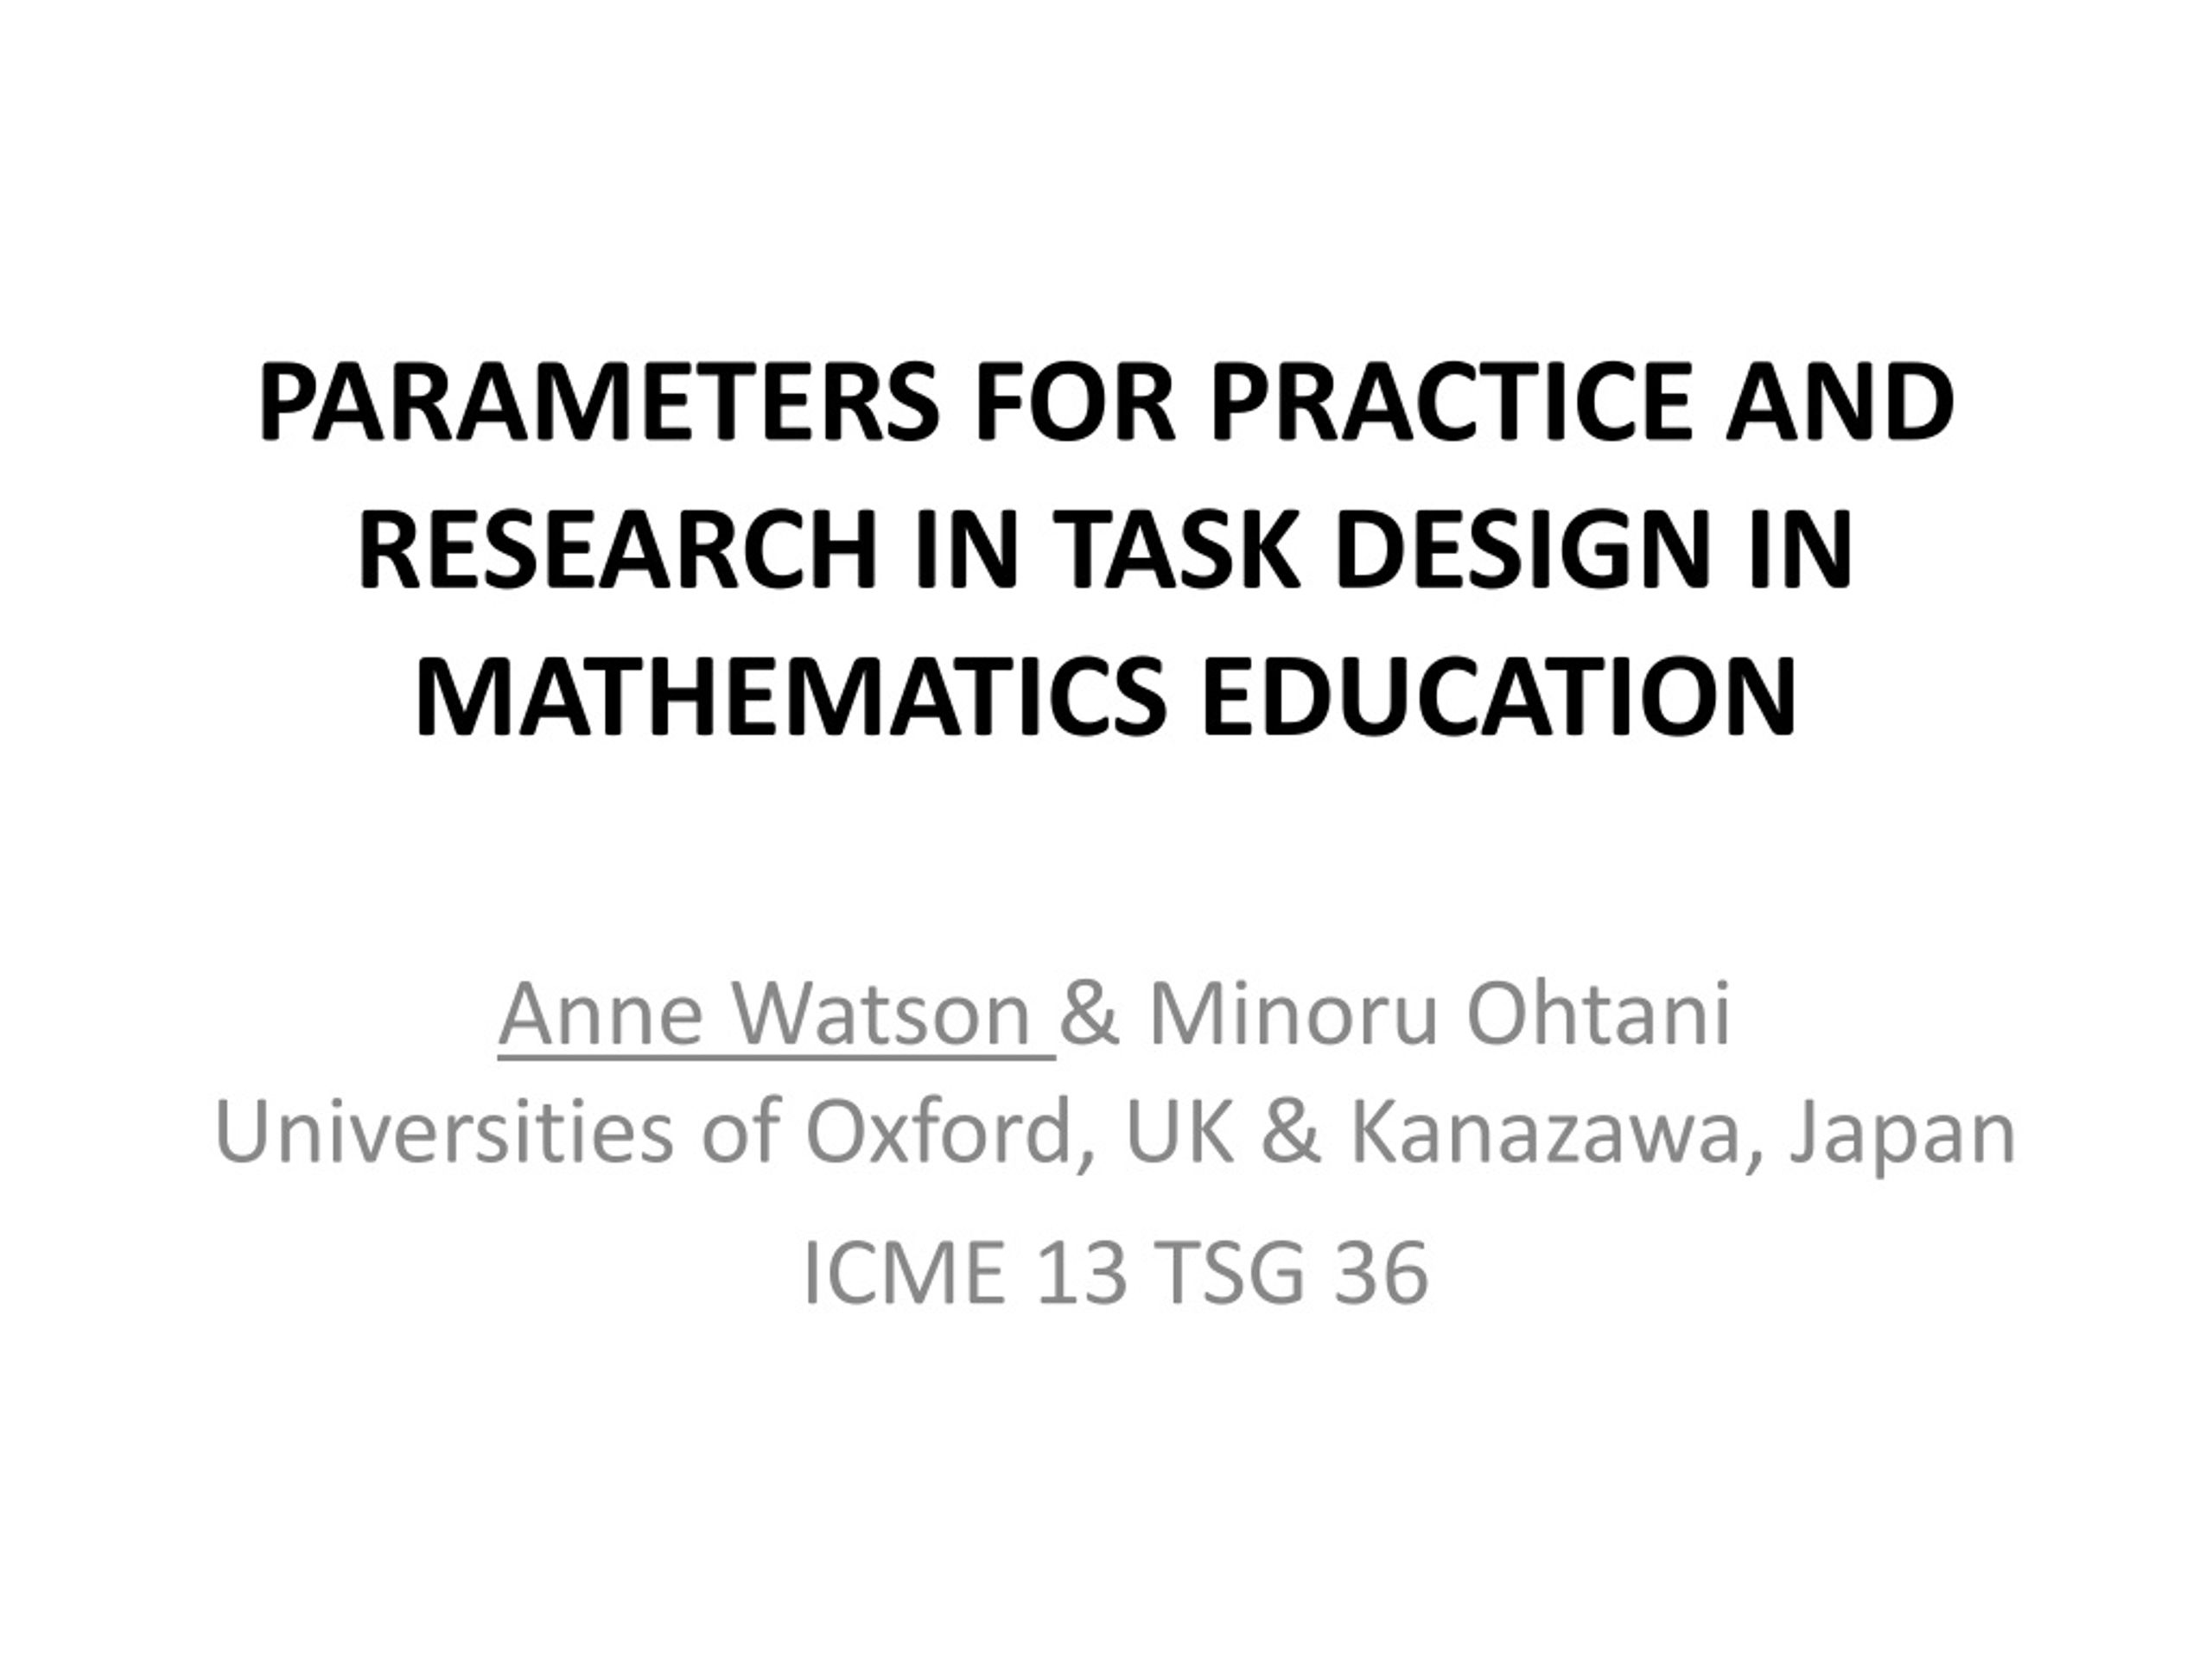 task design in mathematics education